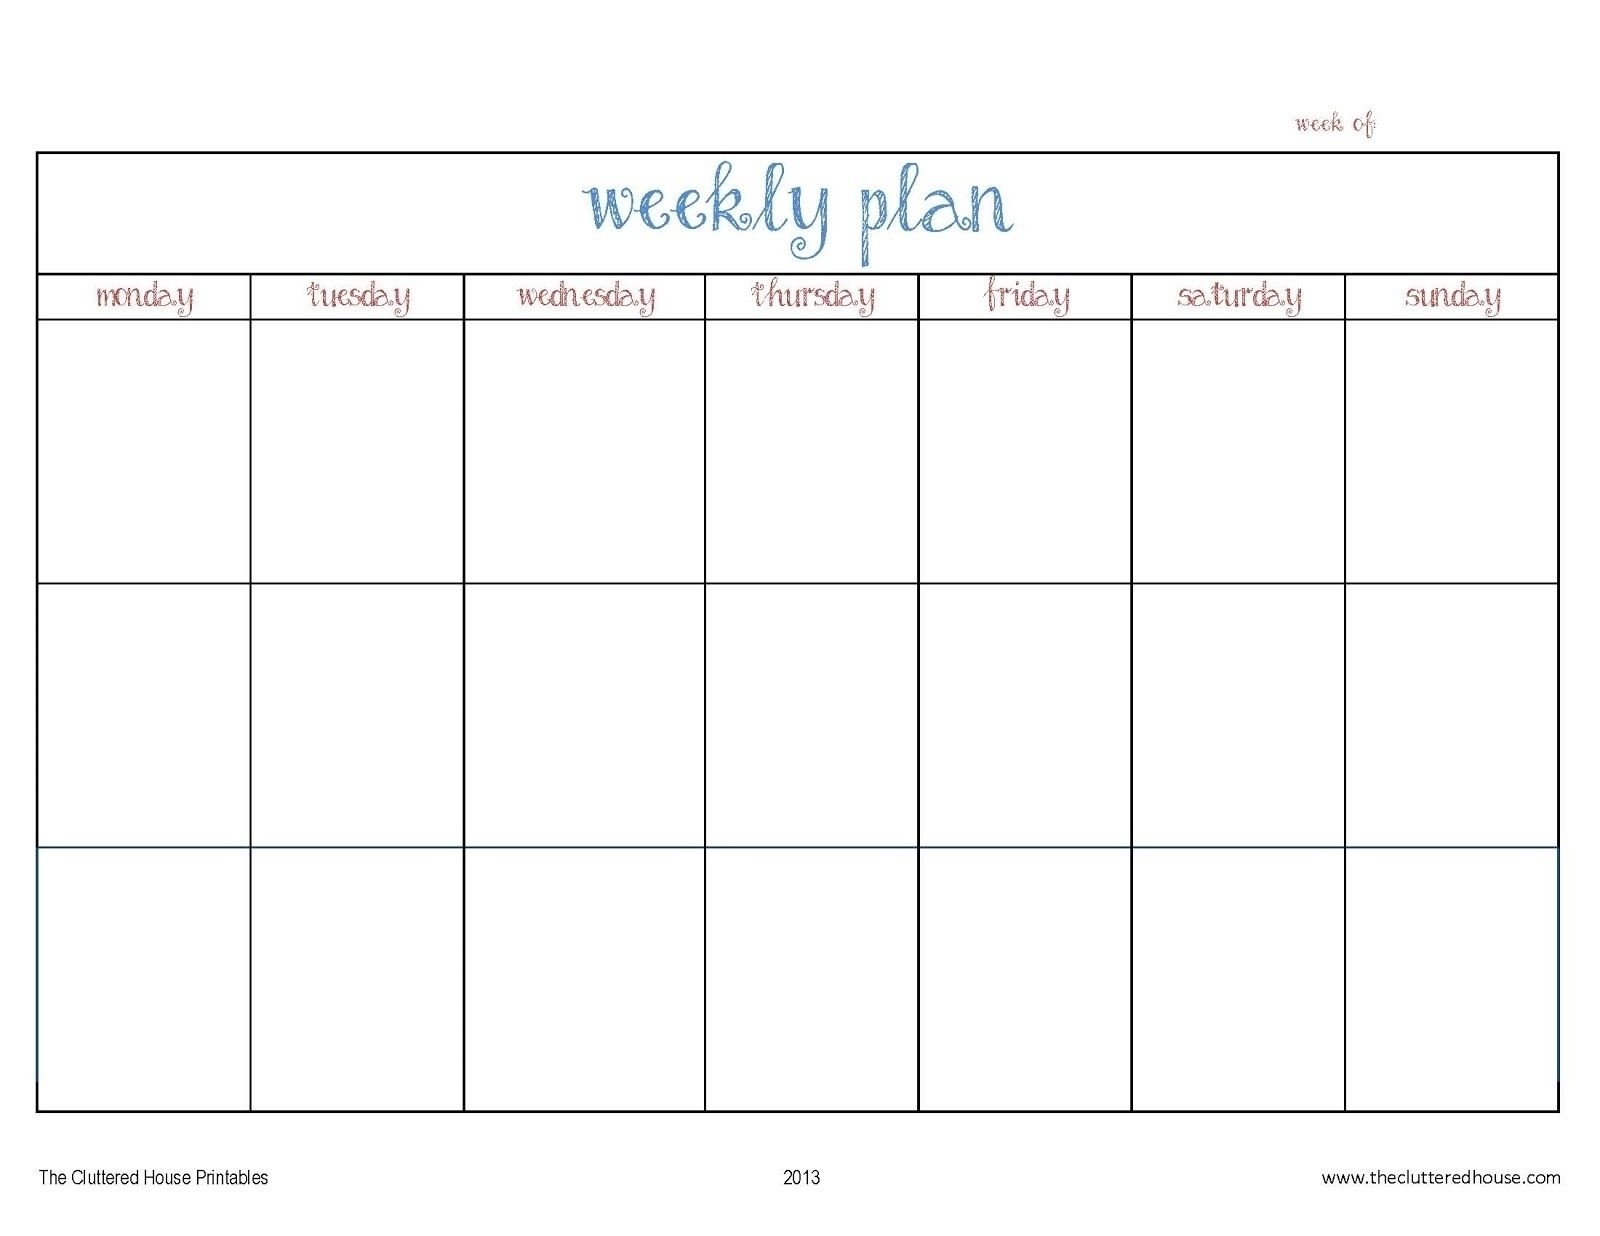 Day Lank Calendar Free Week Template Printable Schedule | Smorad within 7 Day Calendar Template Printable